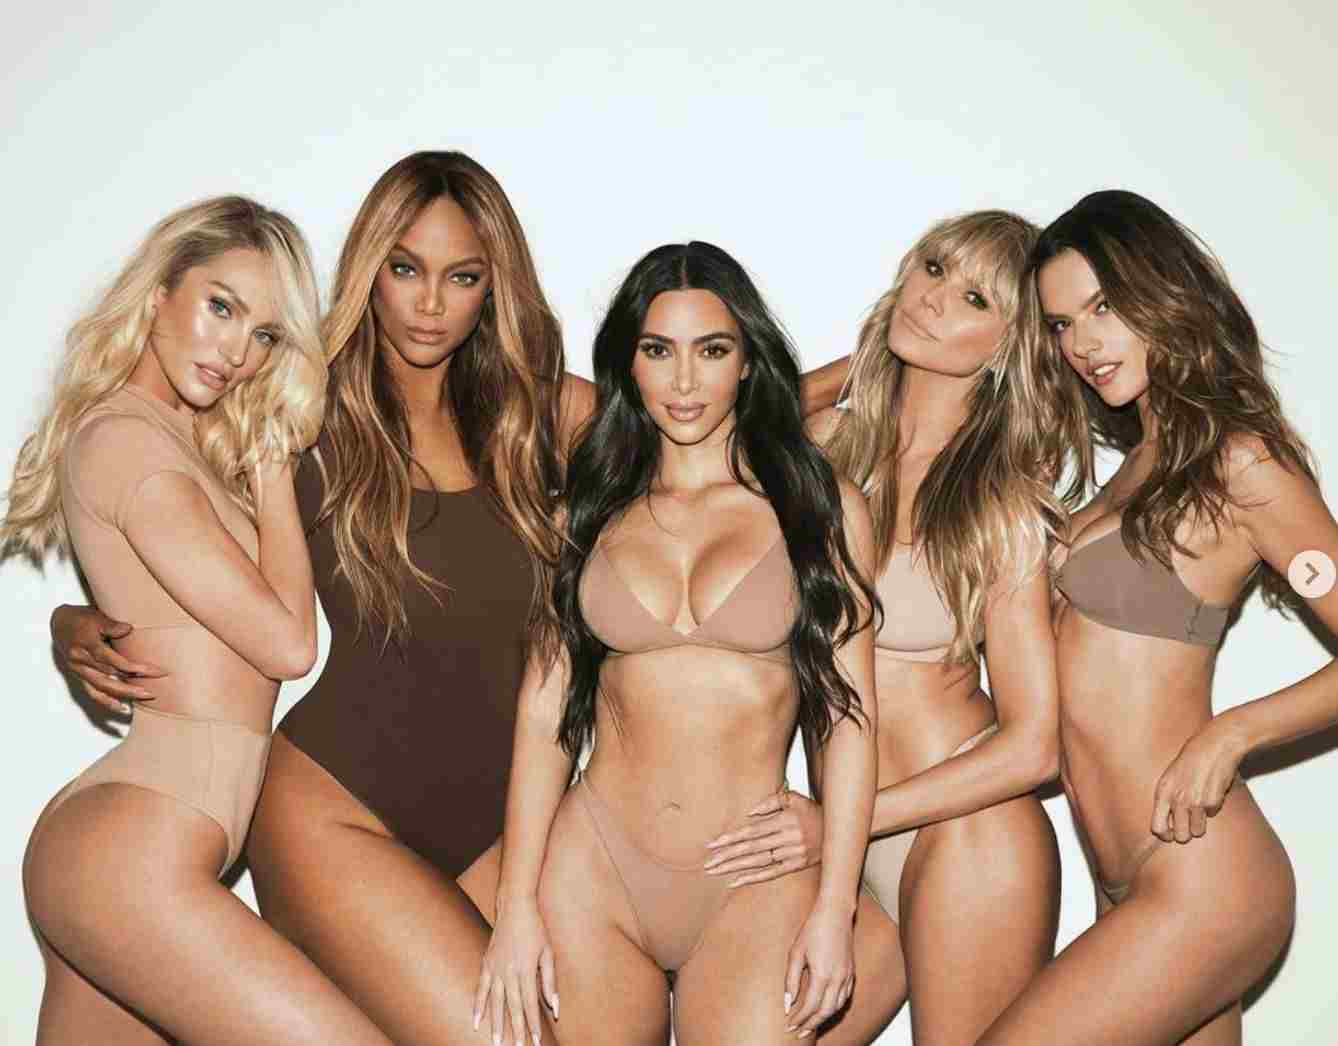 Thanks Kim Kardashian for reuniting these “Victoria's Secret Angels” - The National Bulletin